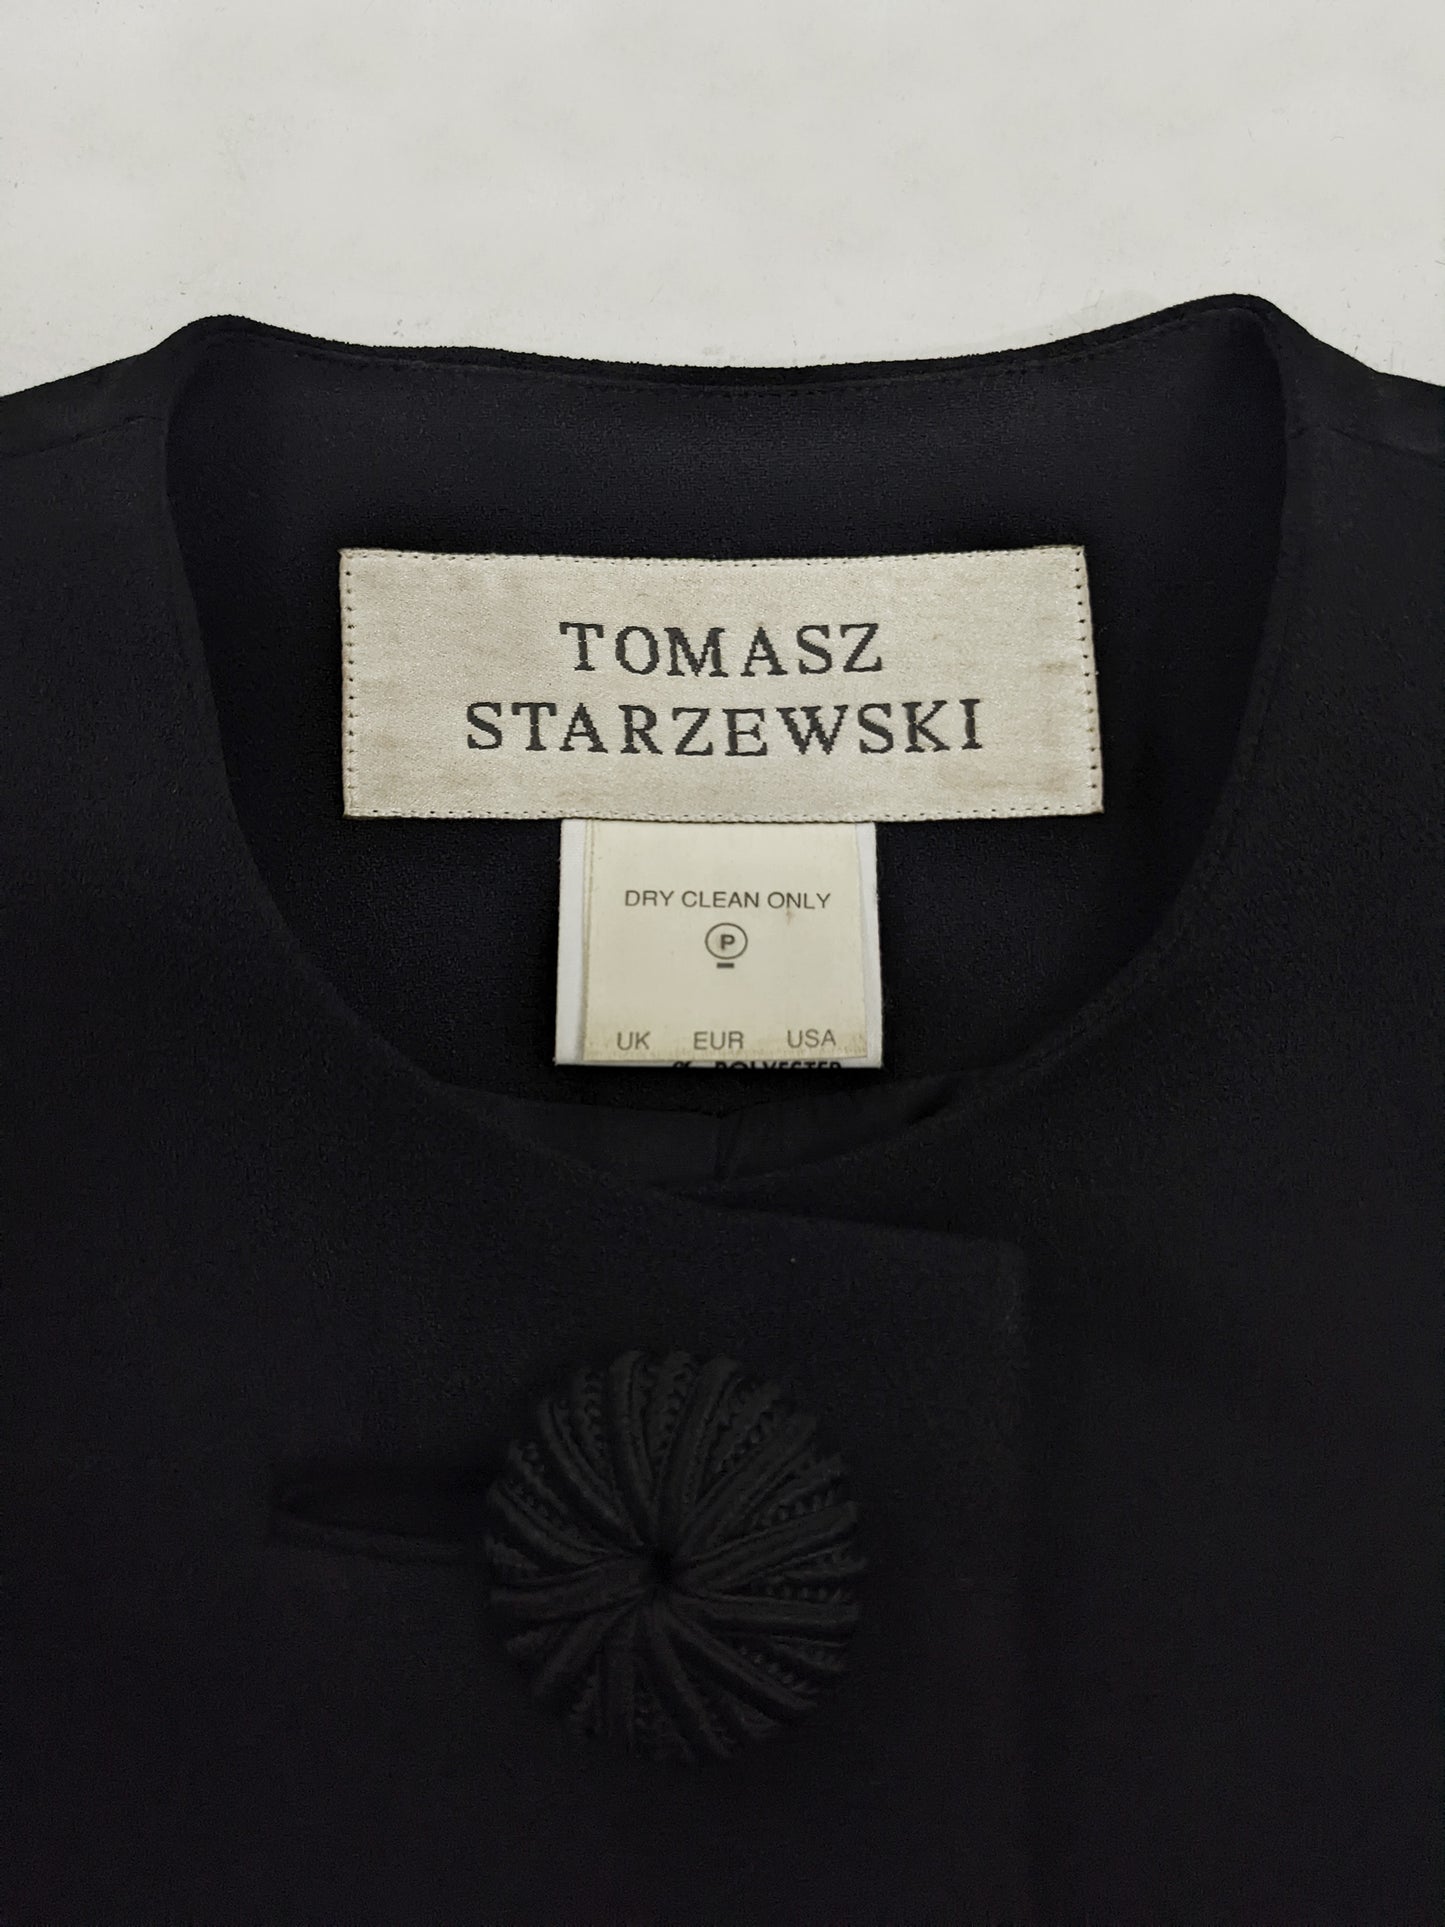 Tomasz Starzewski Vintage Black Crepe Embroidered Jacket, 1980s